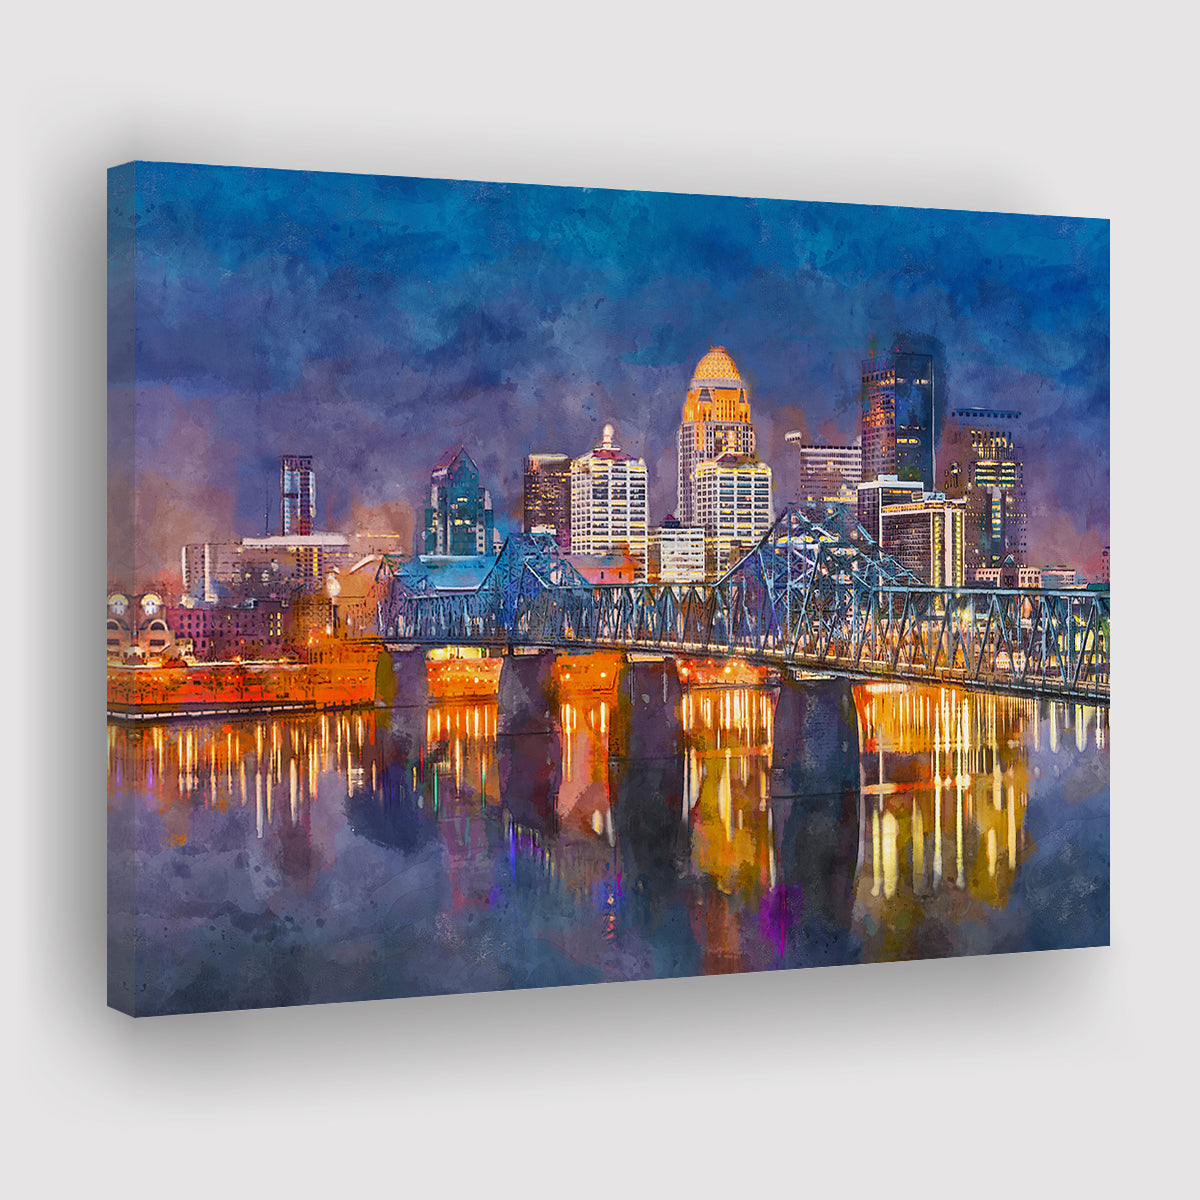 Louisville Kentucky City Skyline, Blue on White Wall Art, Canvas